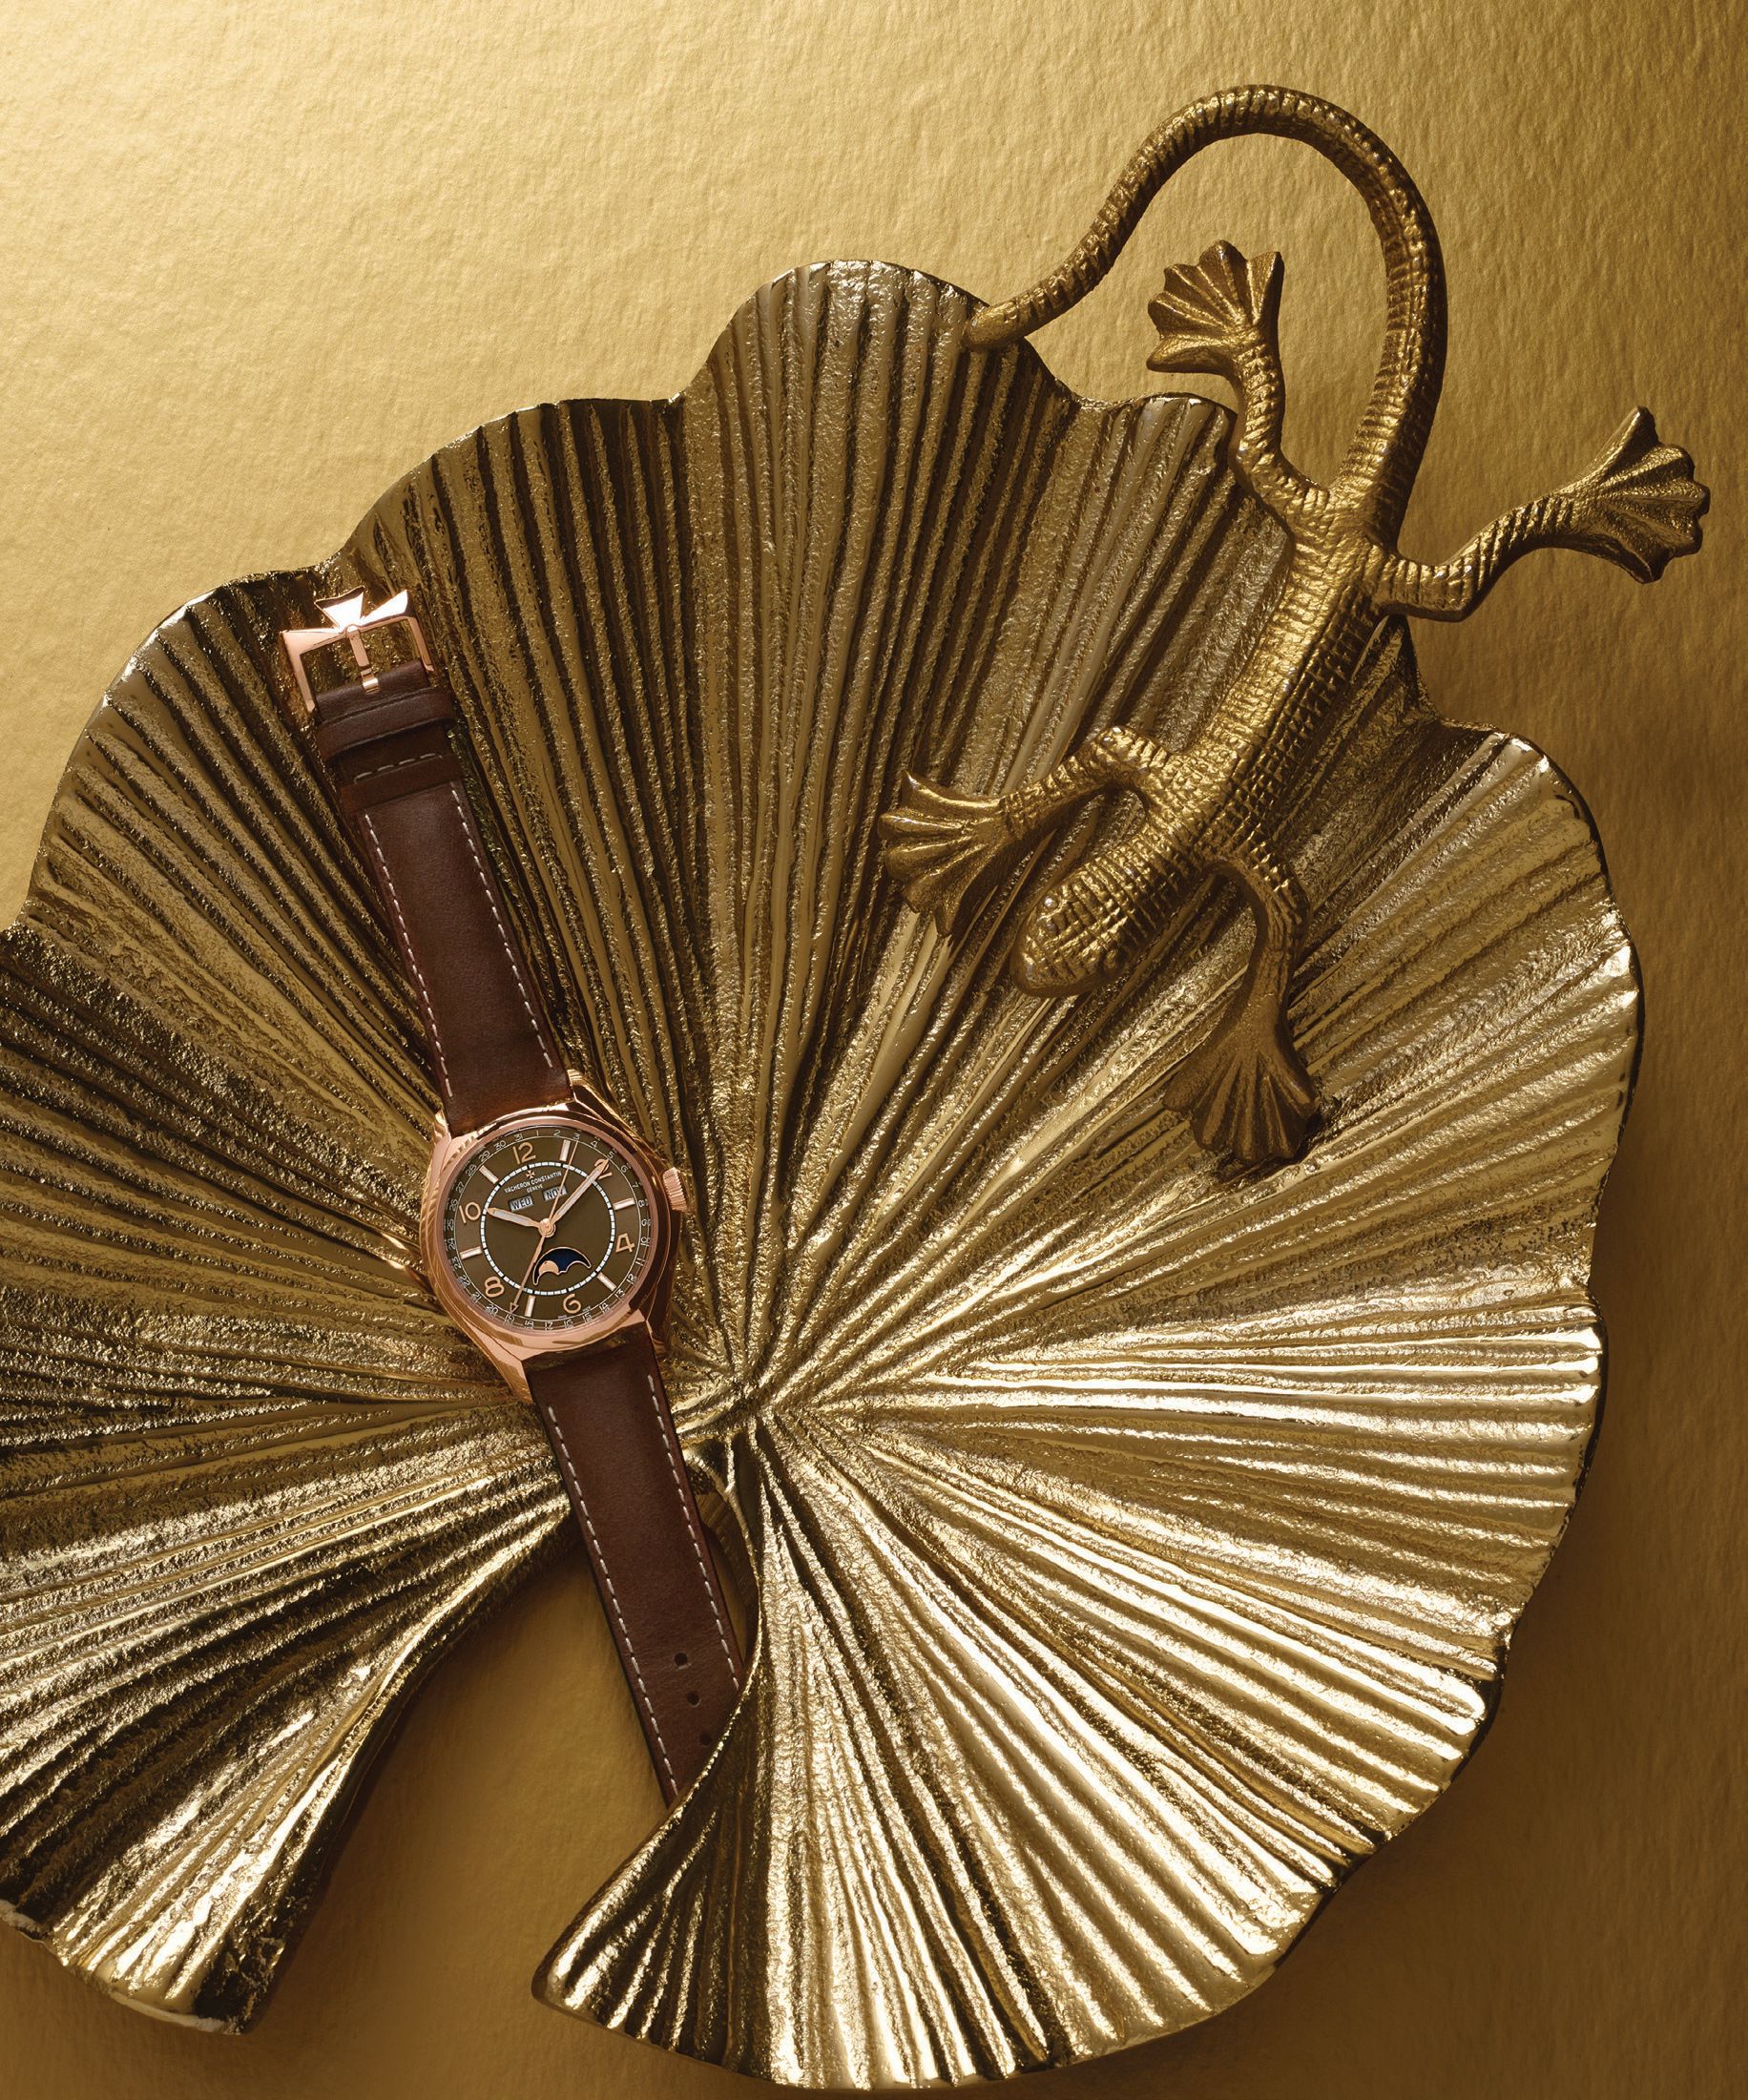 Vacheron Constantin Fiftysix complete calendar 40 mm timepiece in 18K pink gold, vacheronconstantin.com